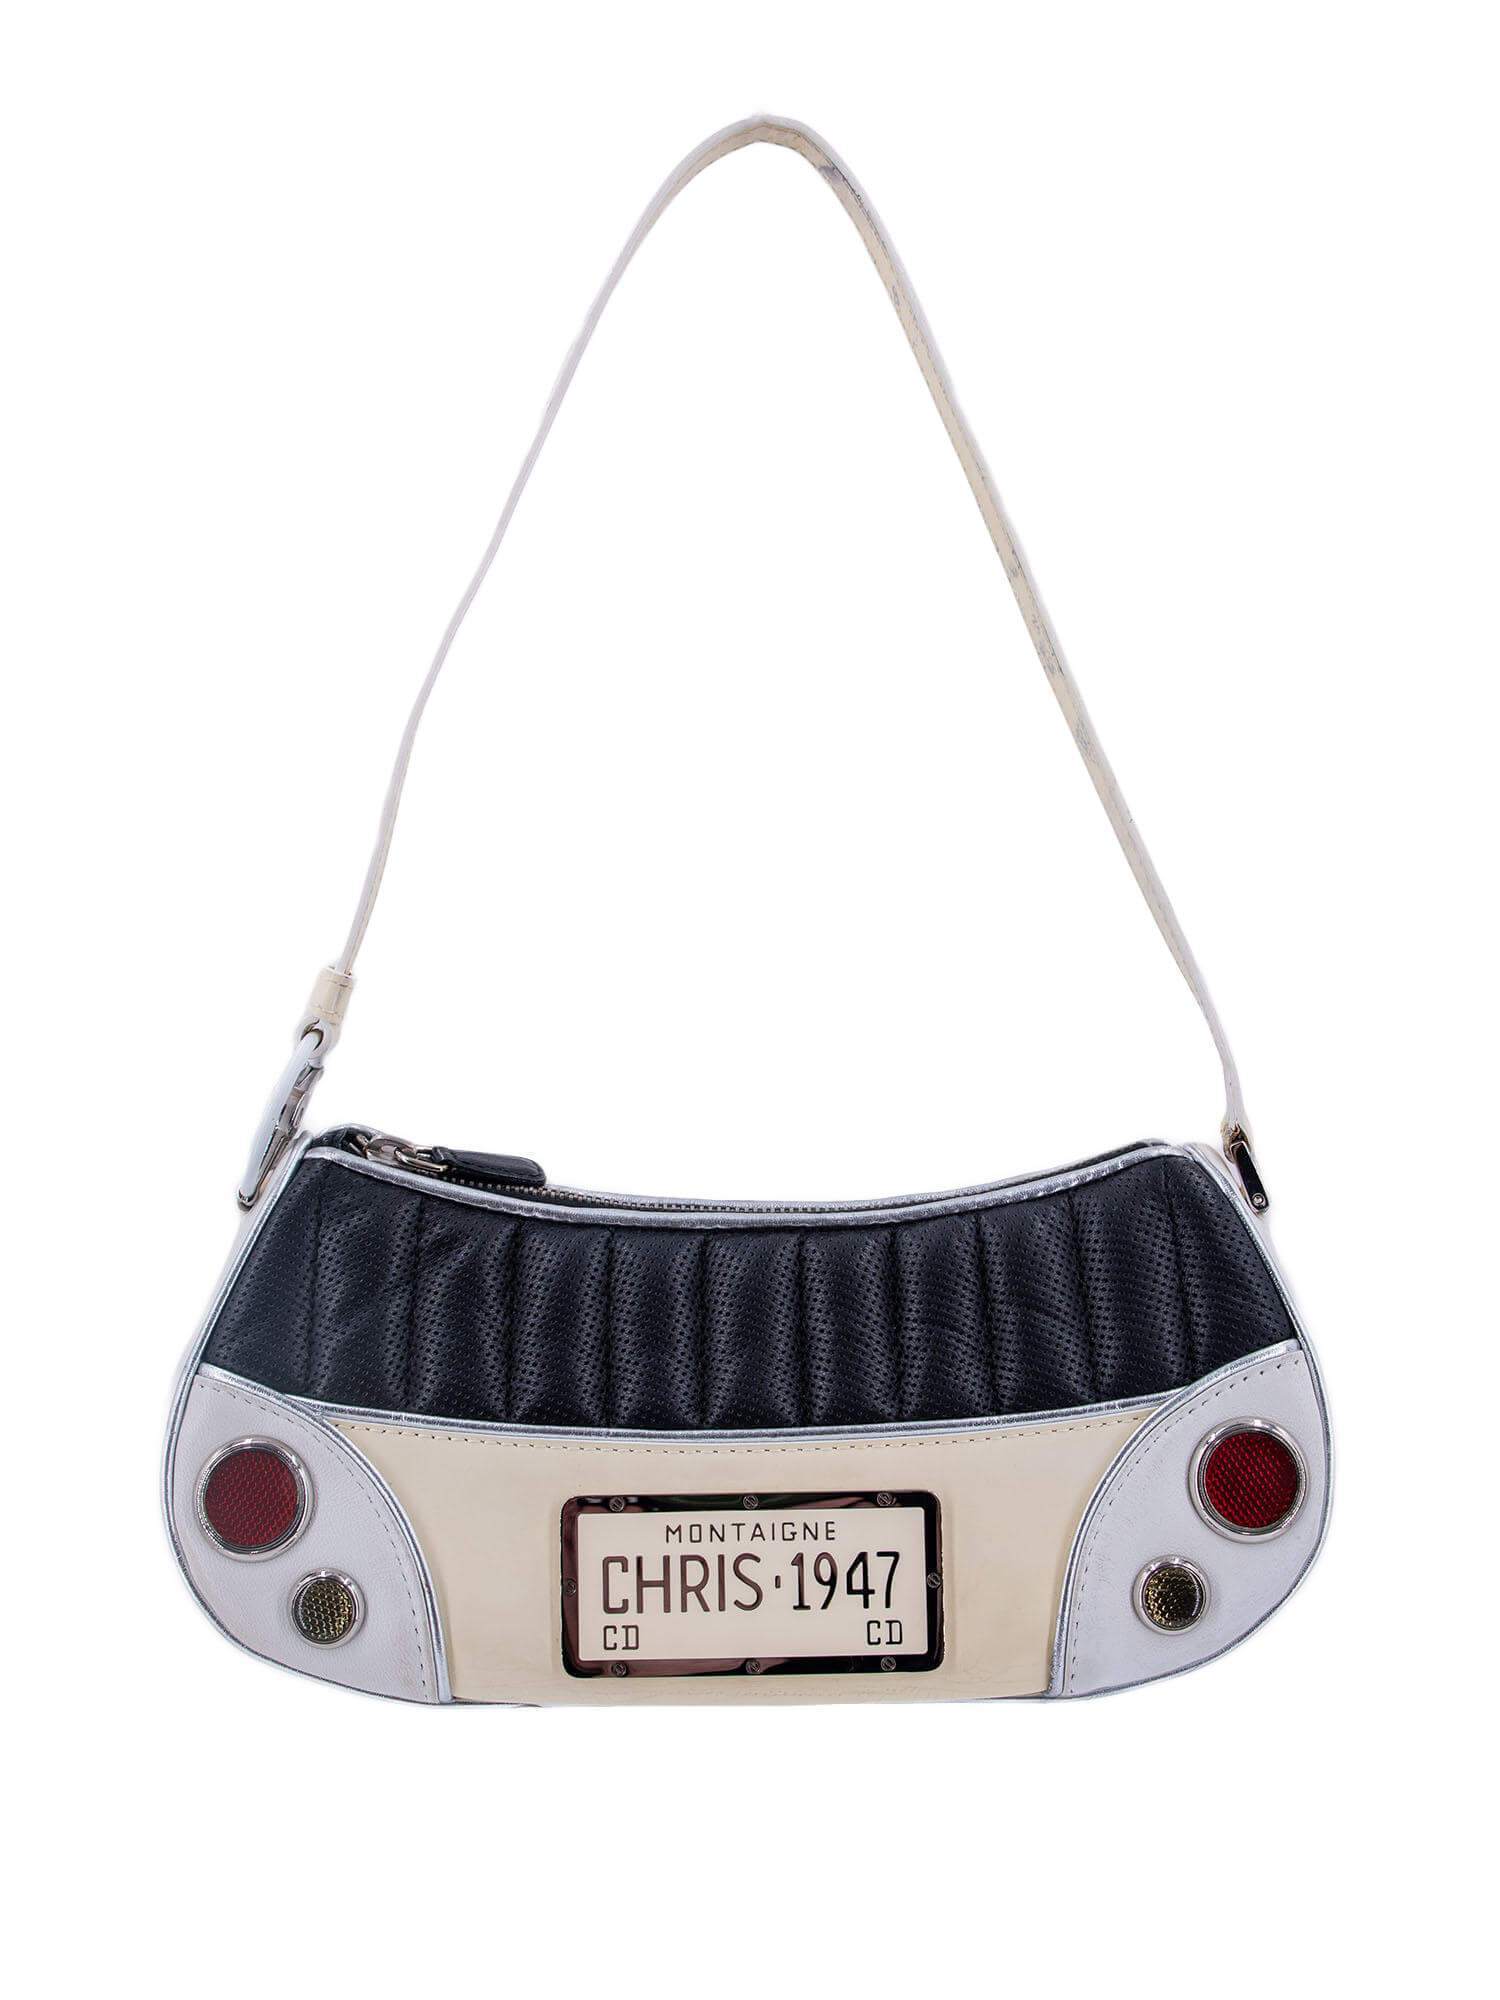 Christian Dior Leather Montaigne Chris 1947 License Plate Bag Black-designer resale